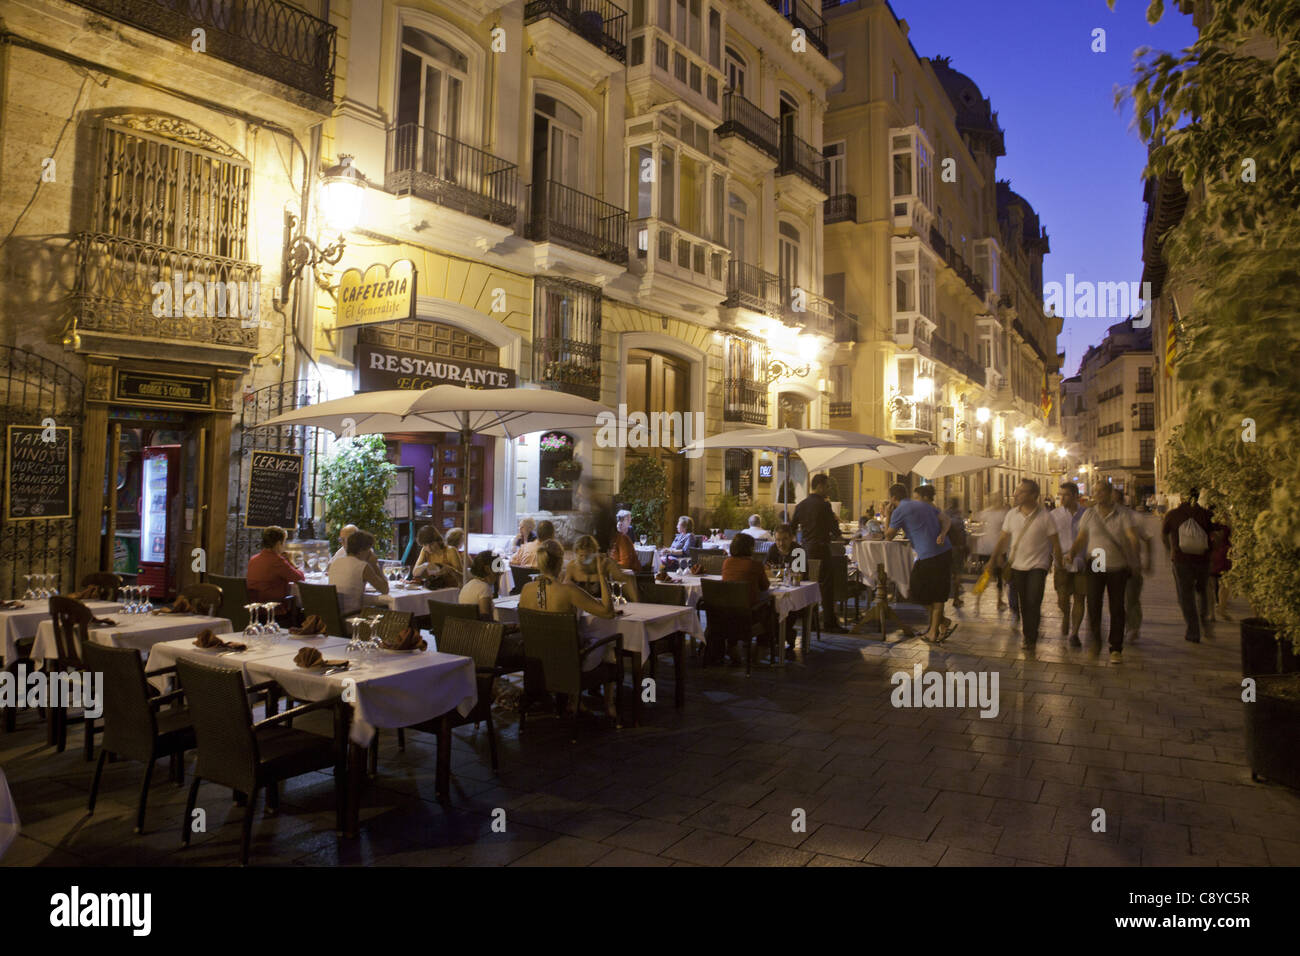 Restaurant El Generalife, Plaza de la Virgin, Valencia, Spain Stock Photo